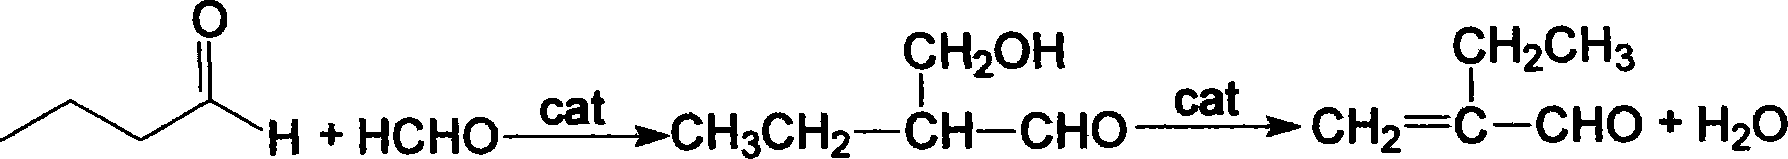 Process of synthesizing bis (trihydroxy methyl propane)